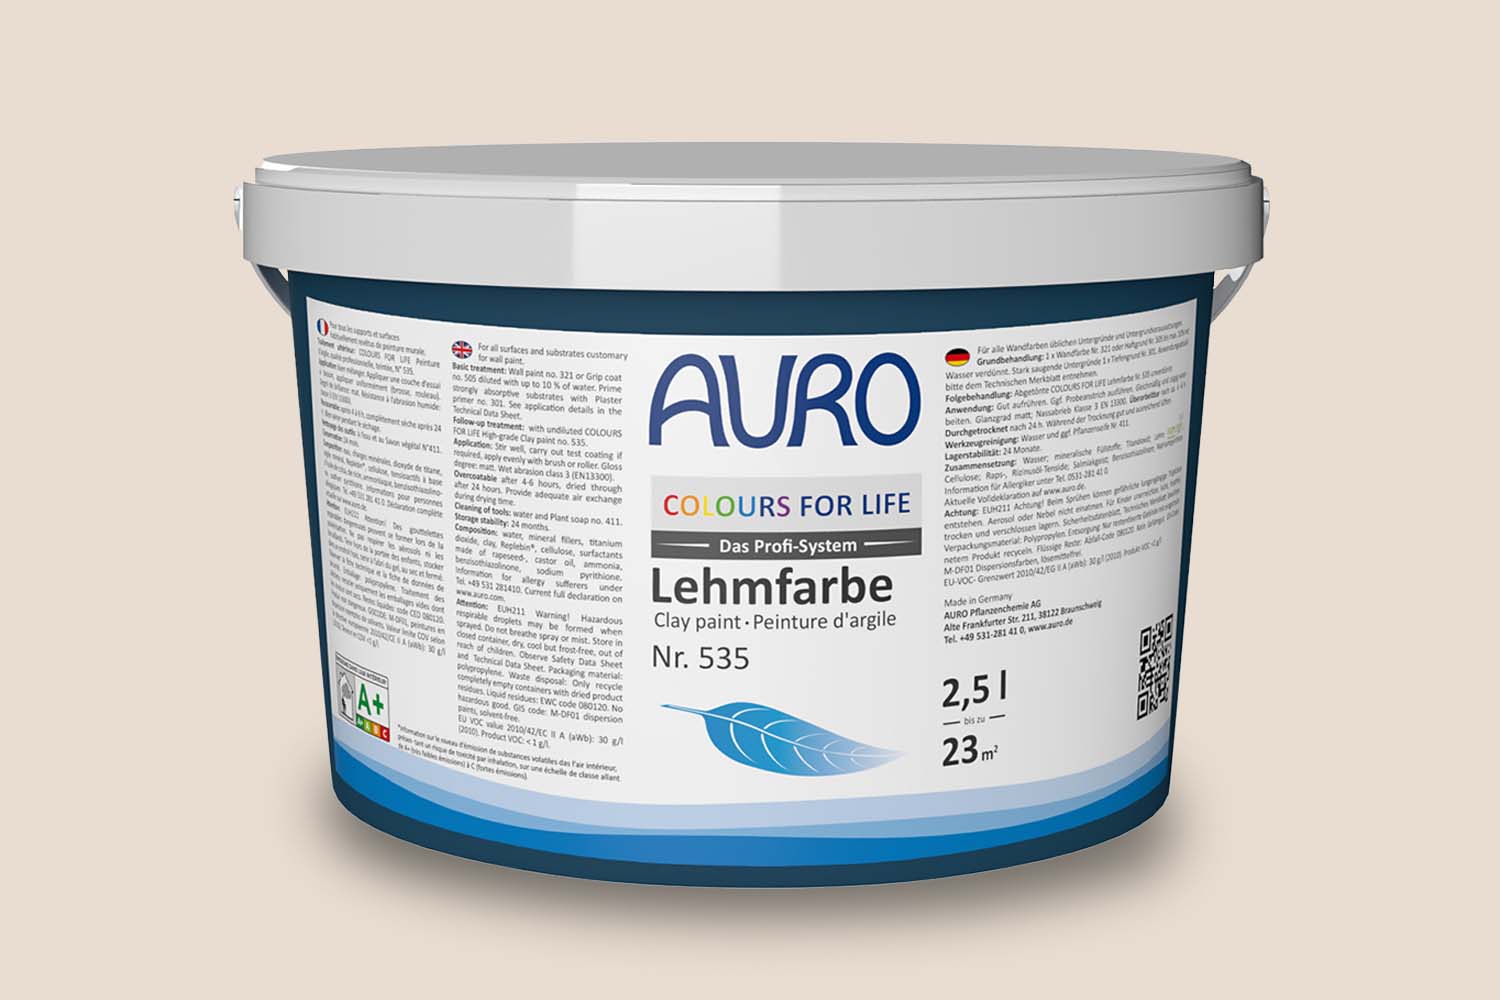 Auro Profi-Lehmfarbe Nr. 535 rice paper Colours For Life